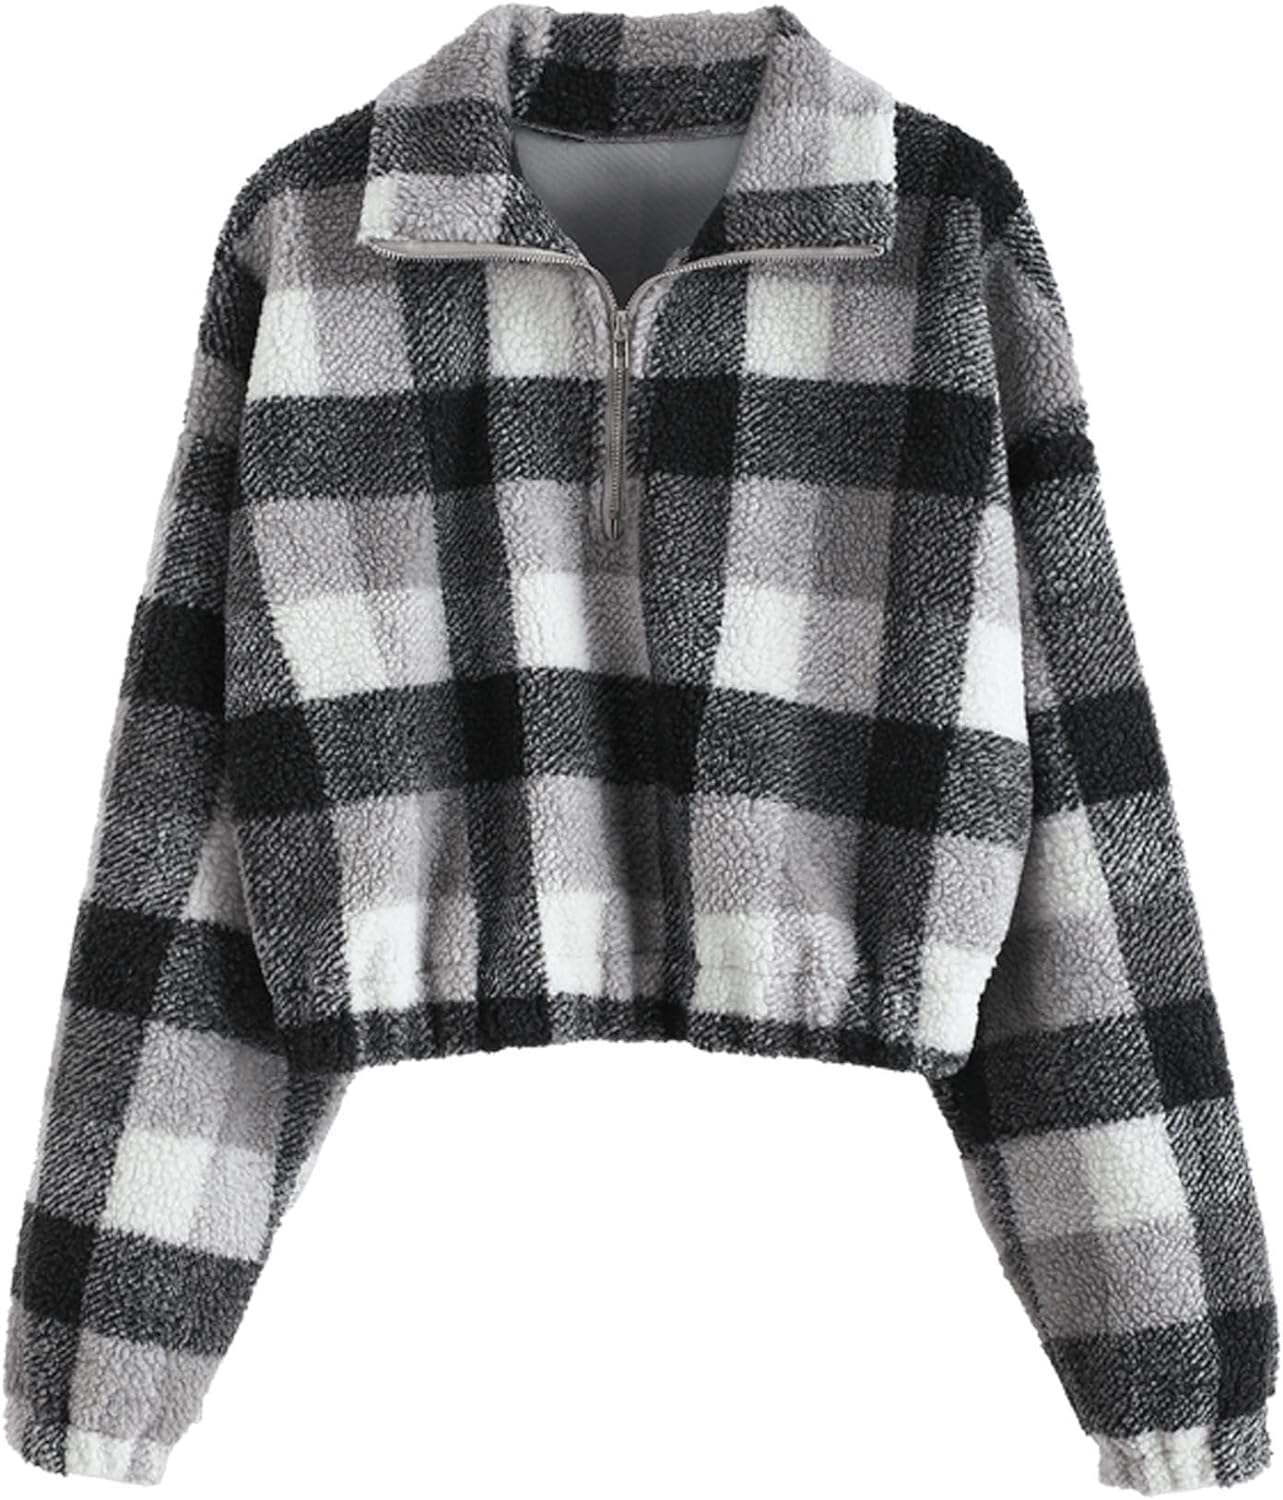 ZAFUL Women's Fashion Long Sleeve Lapel Half Zip Plain Faux Fur Sweatshirt Solid Color Crop Pullover Tops